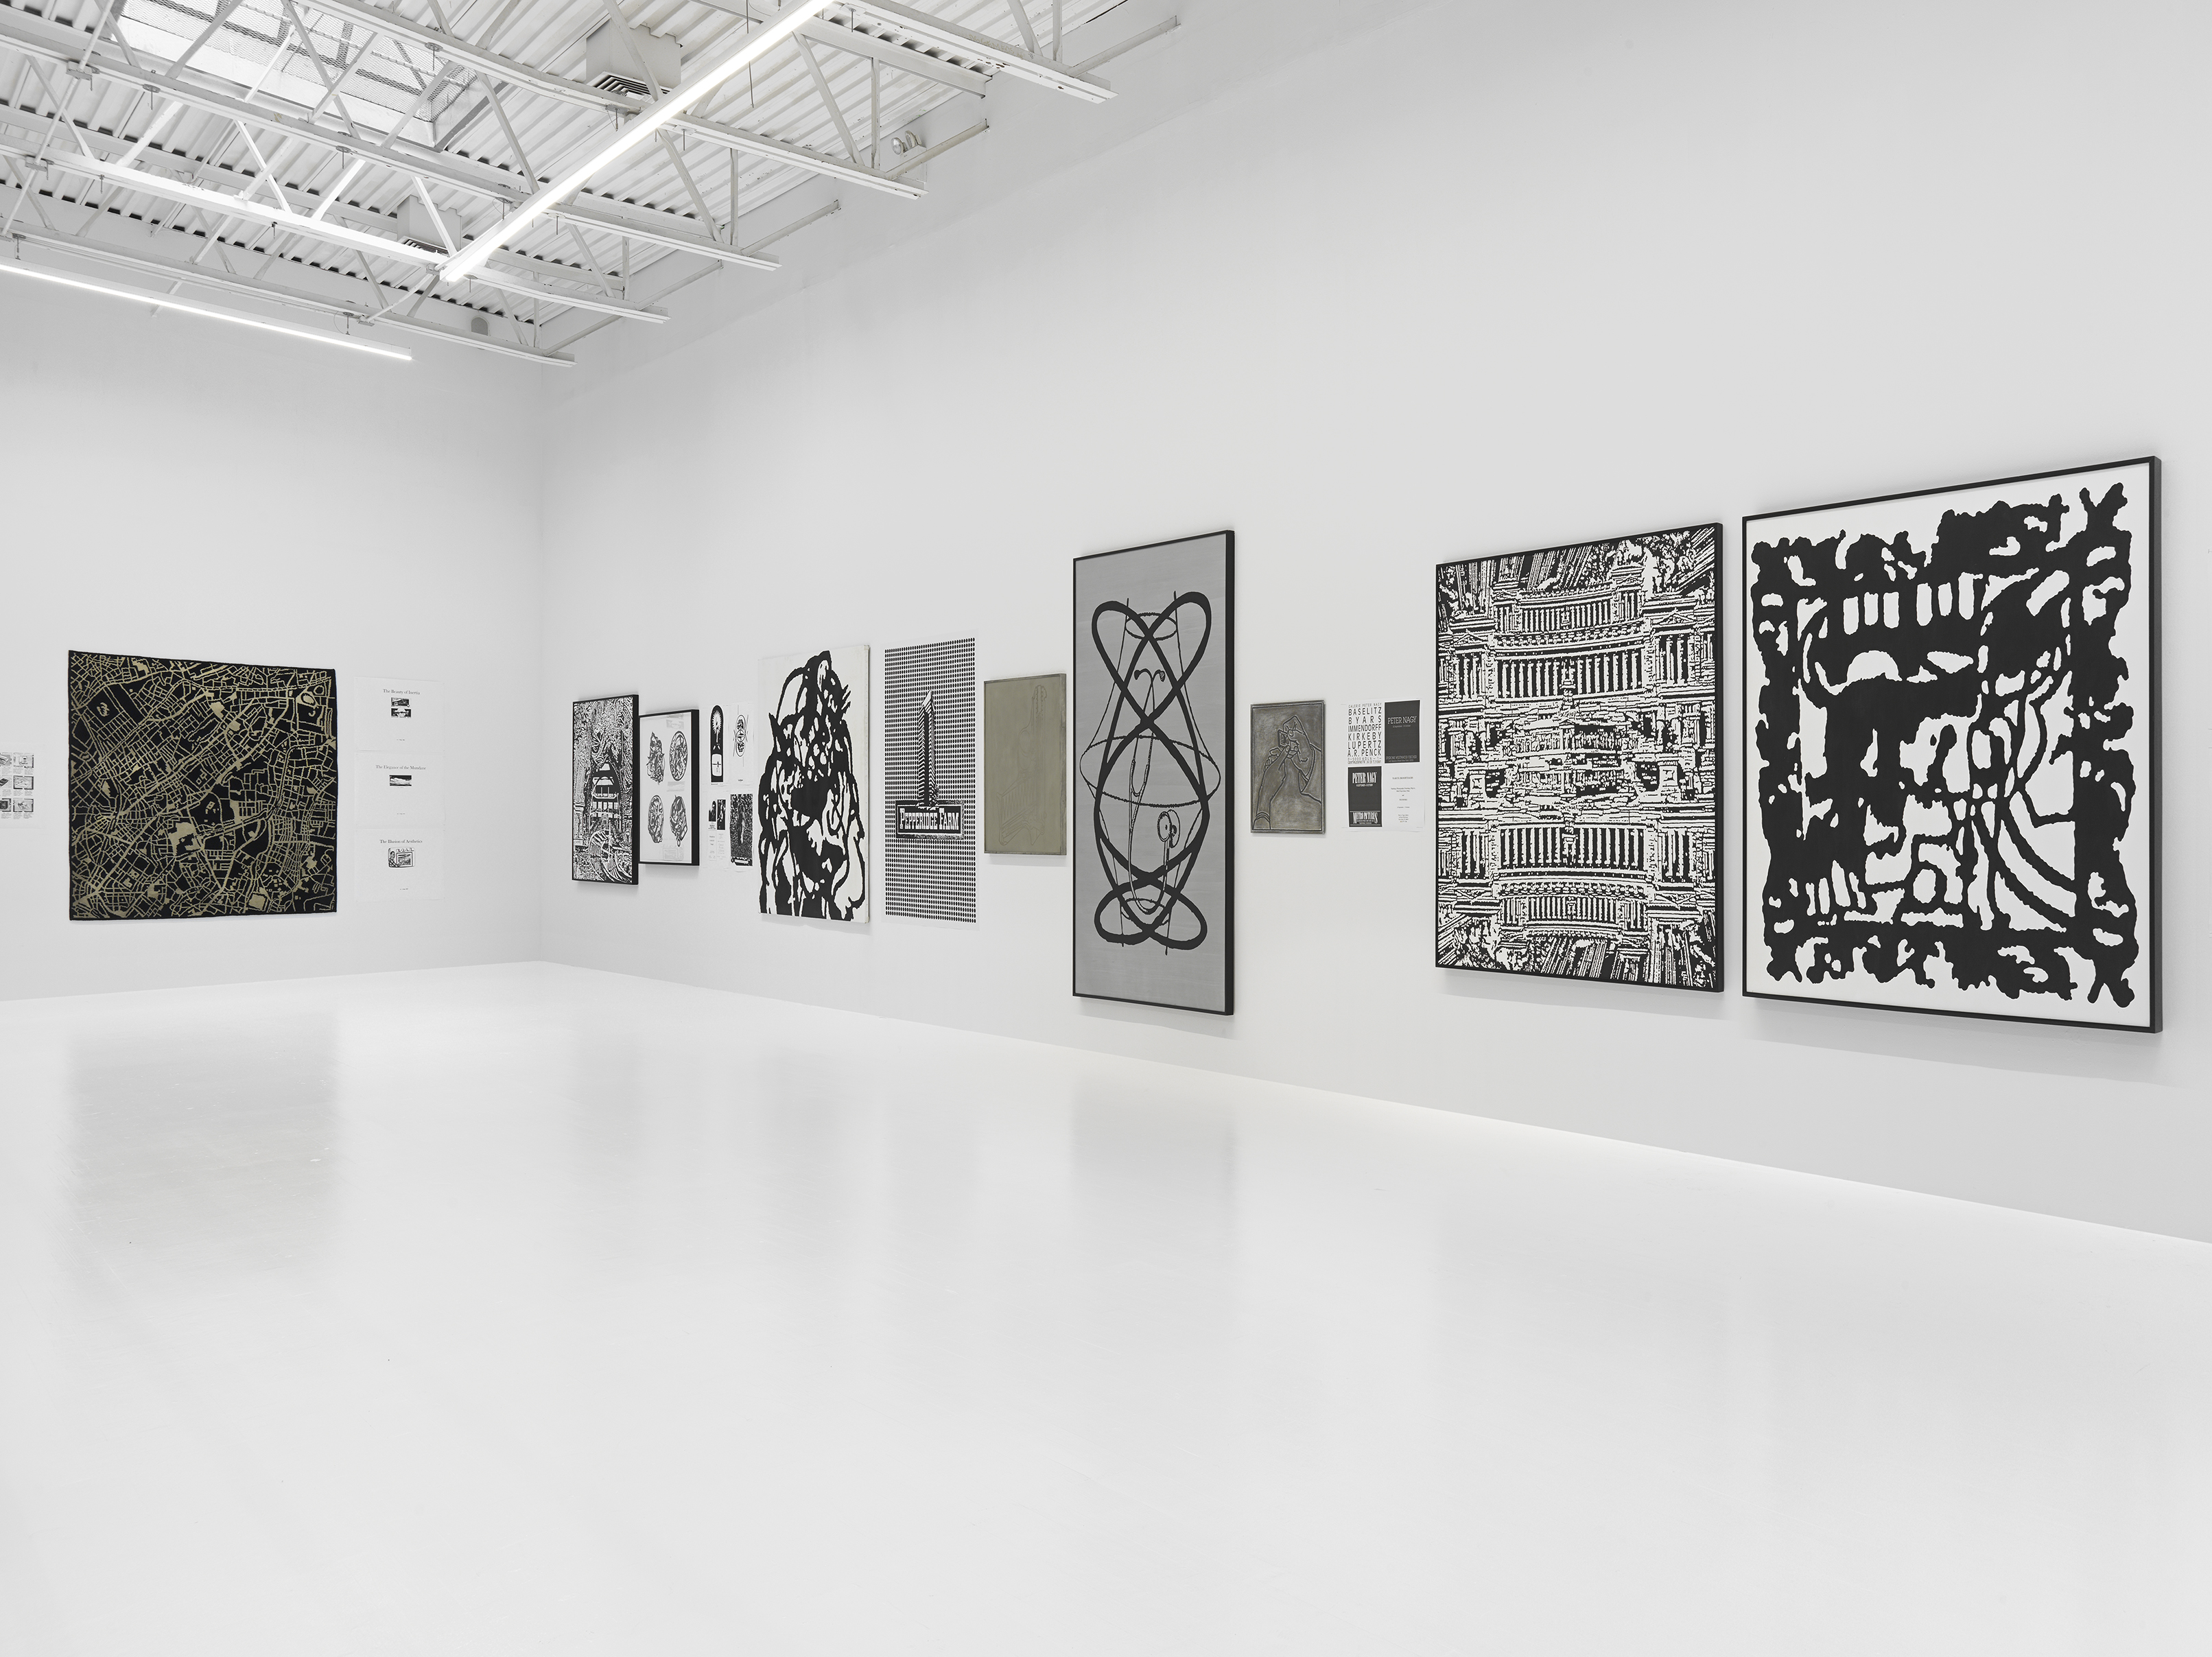 Installation view, Peter Nagy: Entertainment Erases History, Jeffrey Deitch, New York, NY, 2020